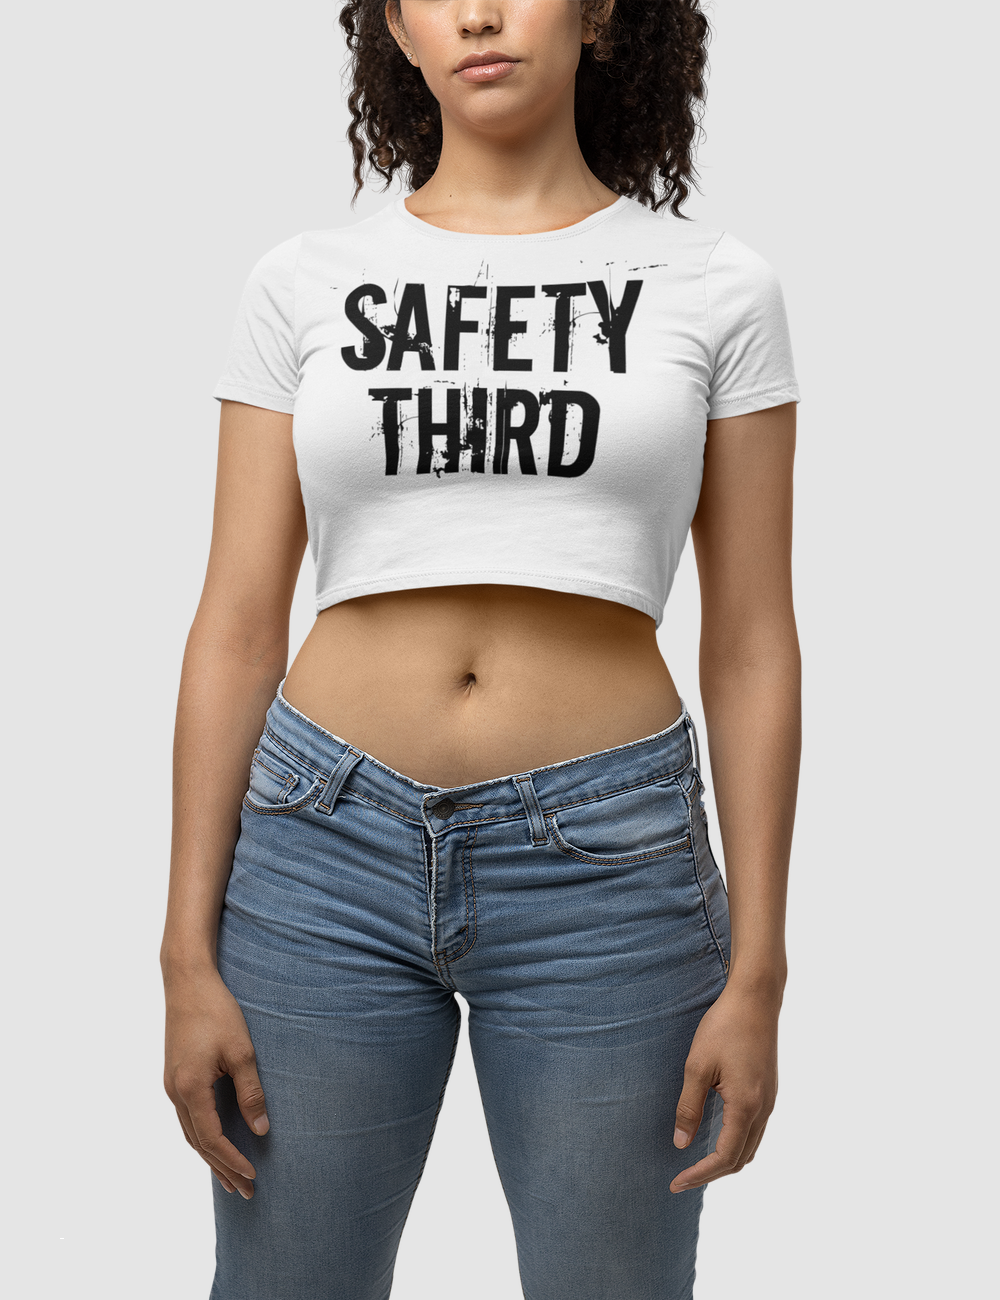 Safety Third Women's Fitted Crop Top T-Shirt OniTakai